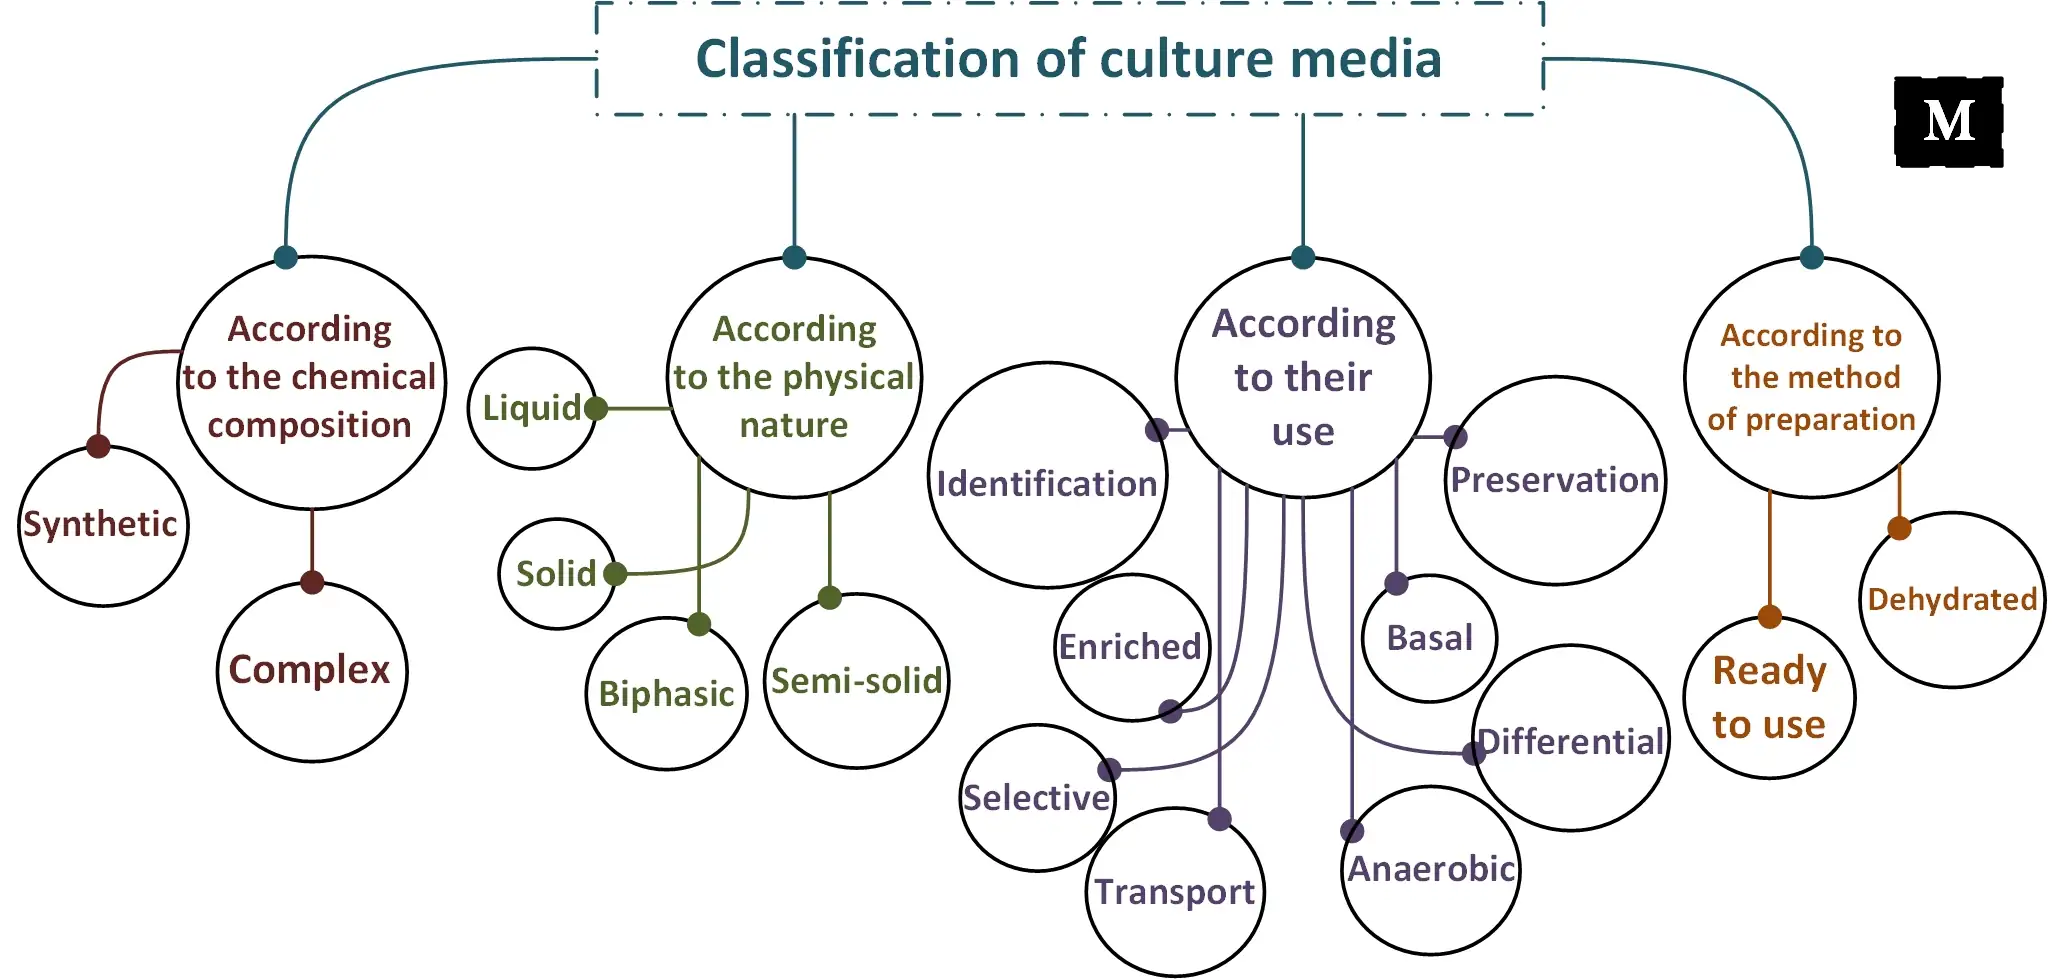 Classification of culture media